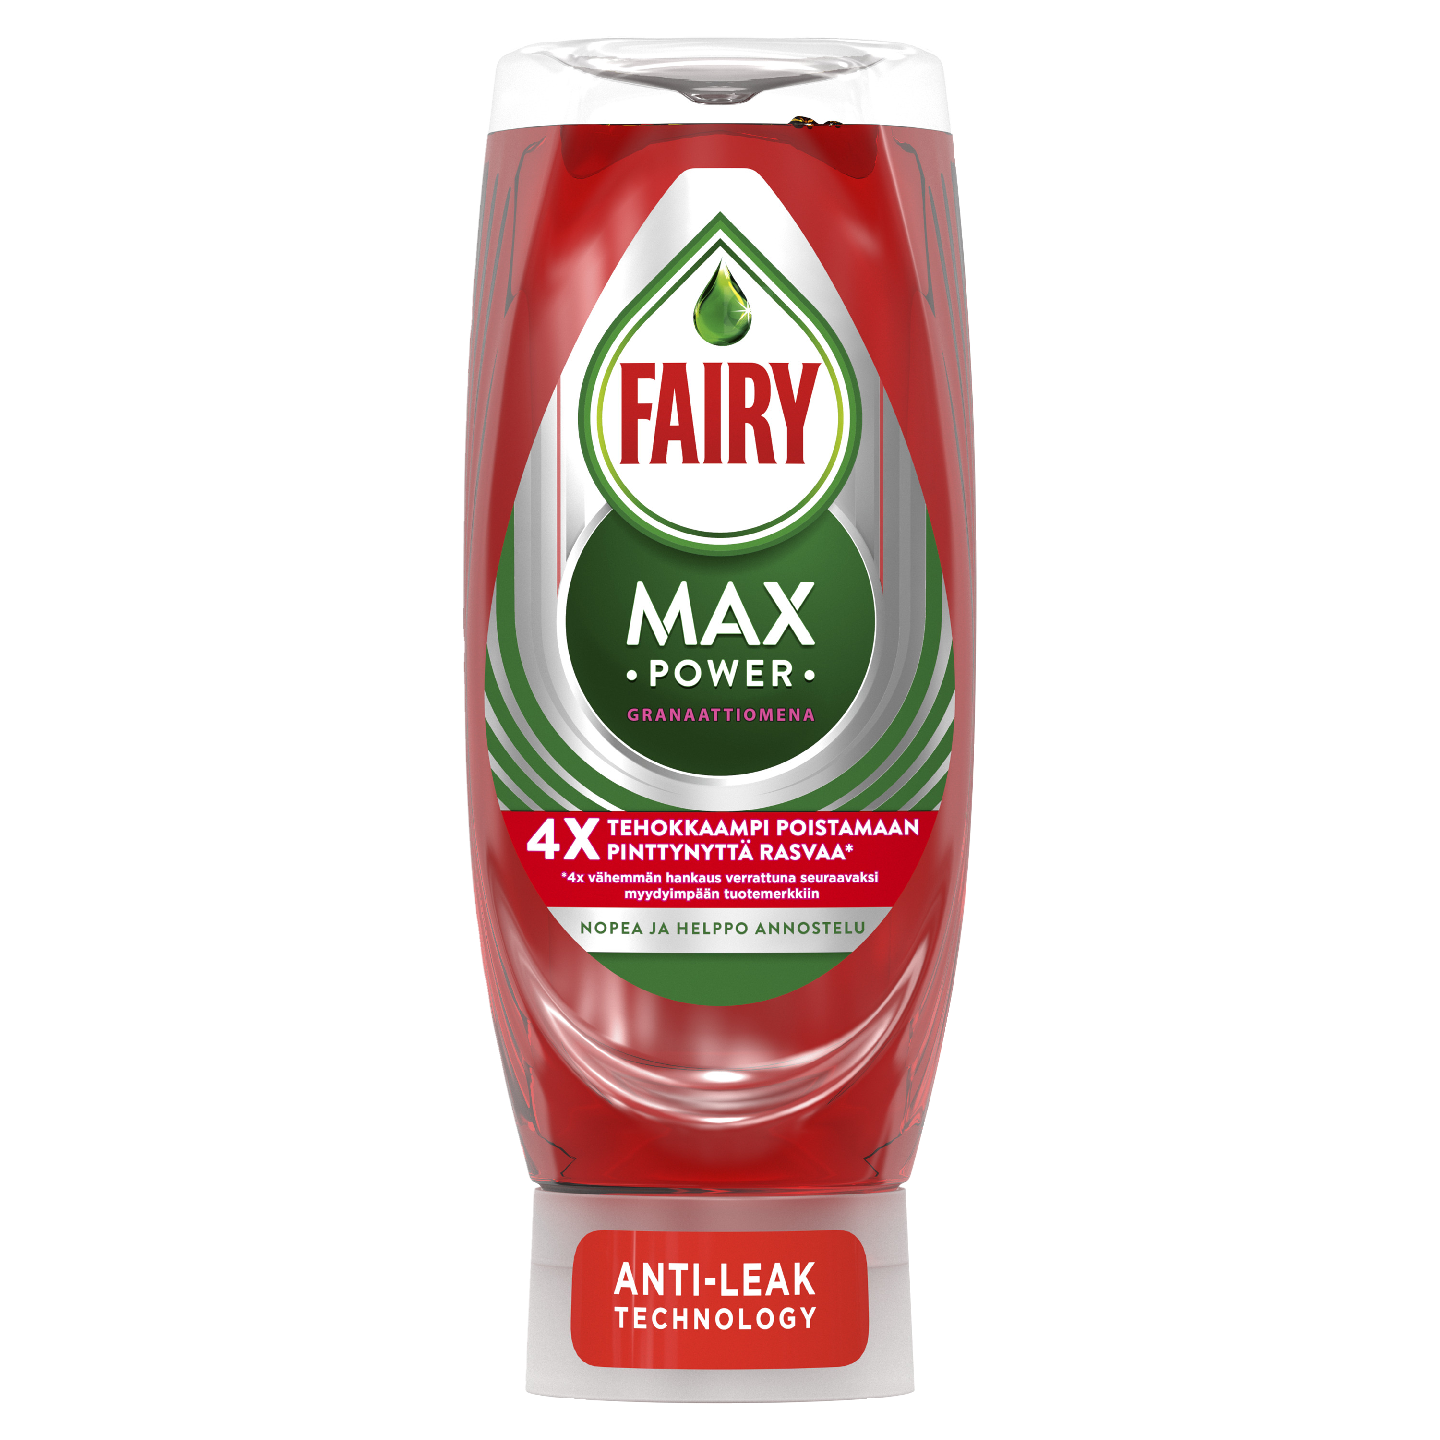 Fairy Max Power astianpesuaine 450ml granaattiomena